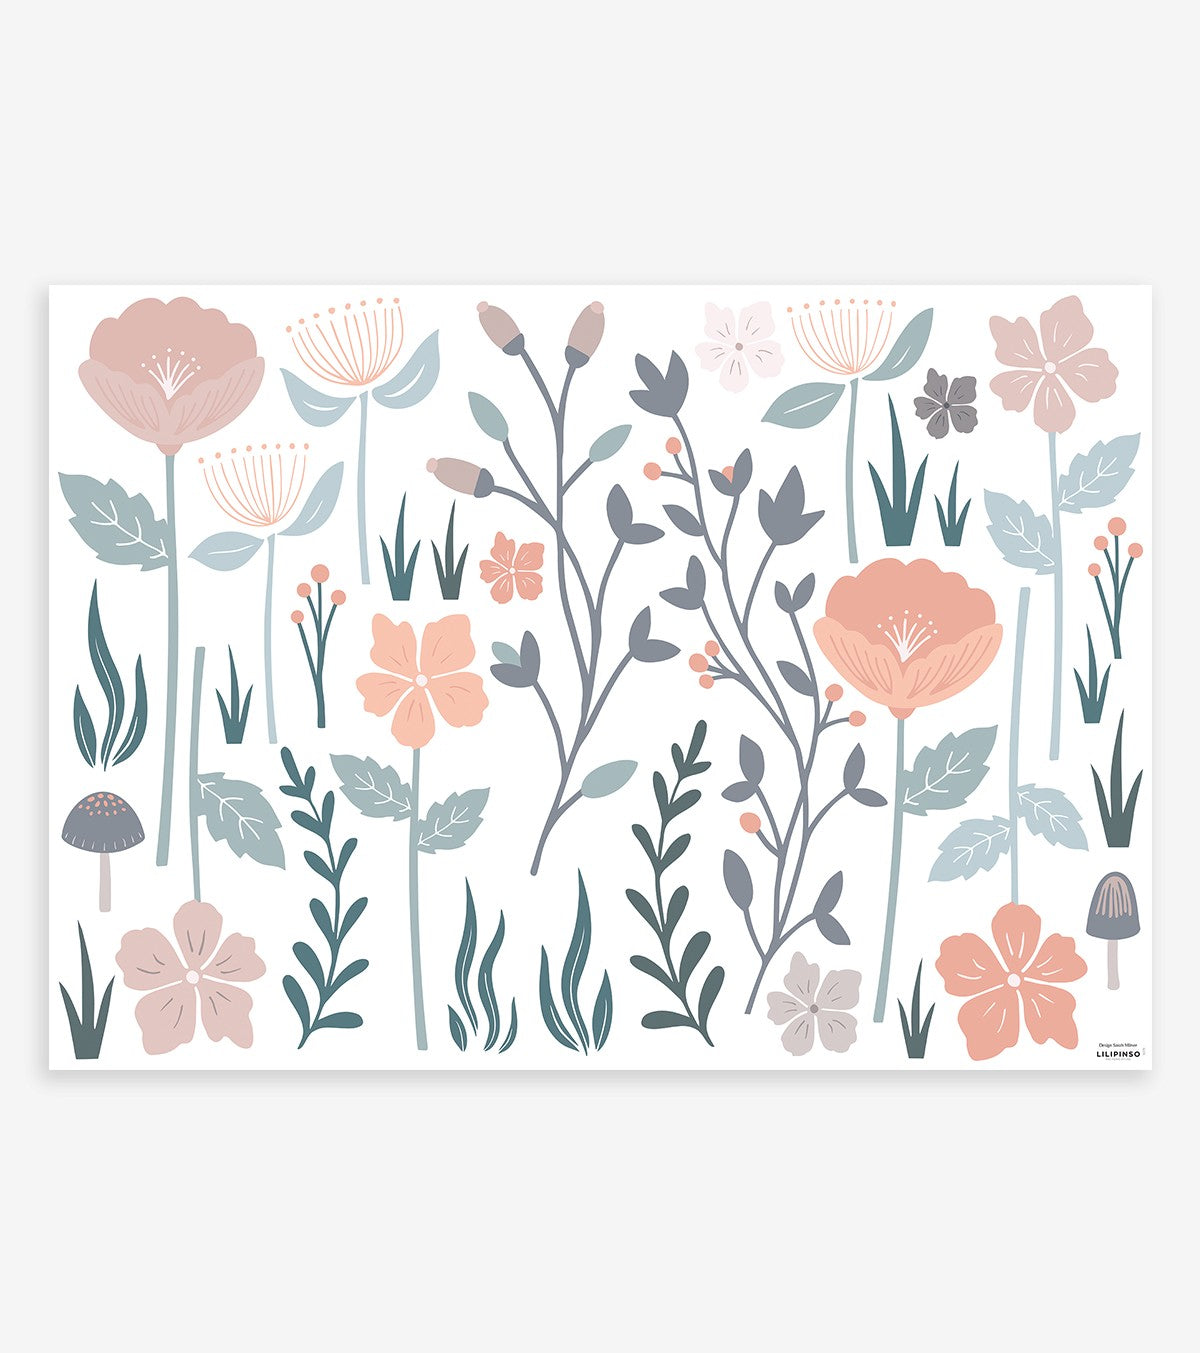 ADELE - Stickers muraux - Grandes fleurs